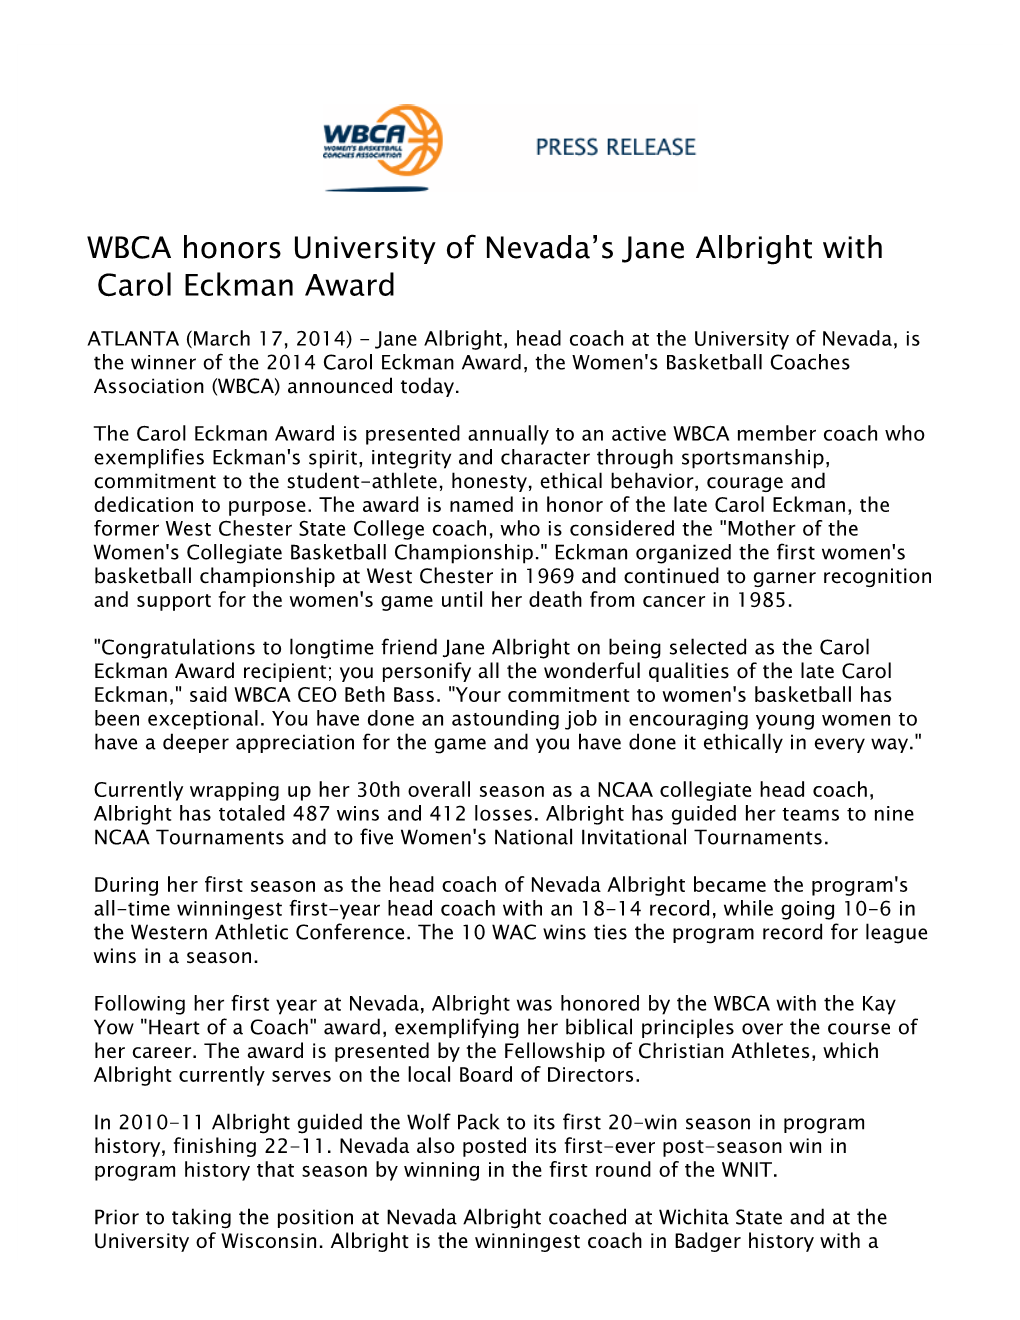 WBCA Honors University of Nevada's Jane Albright with Carol Eckman